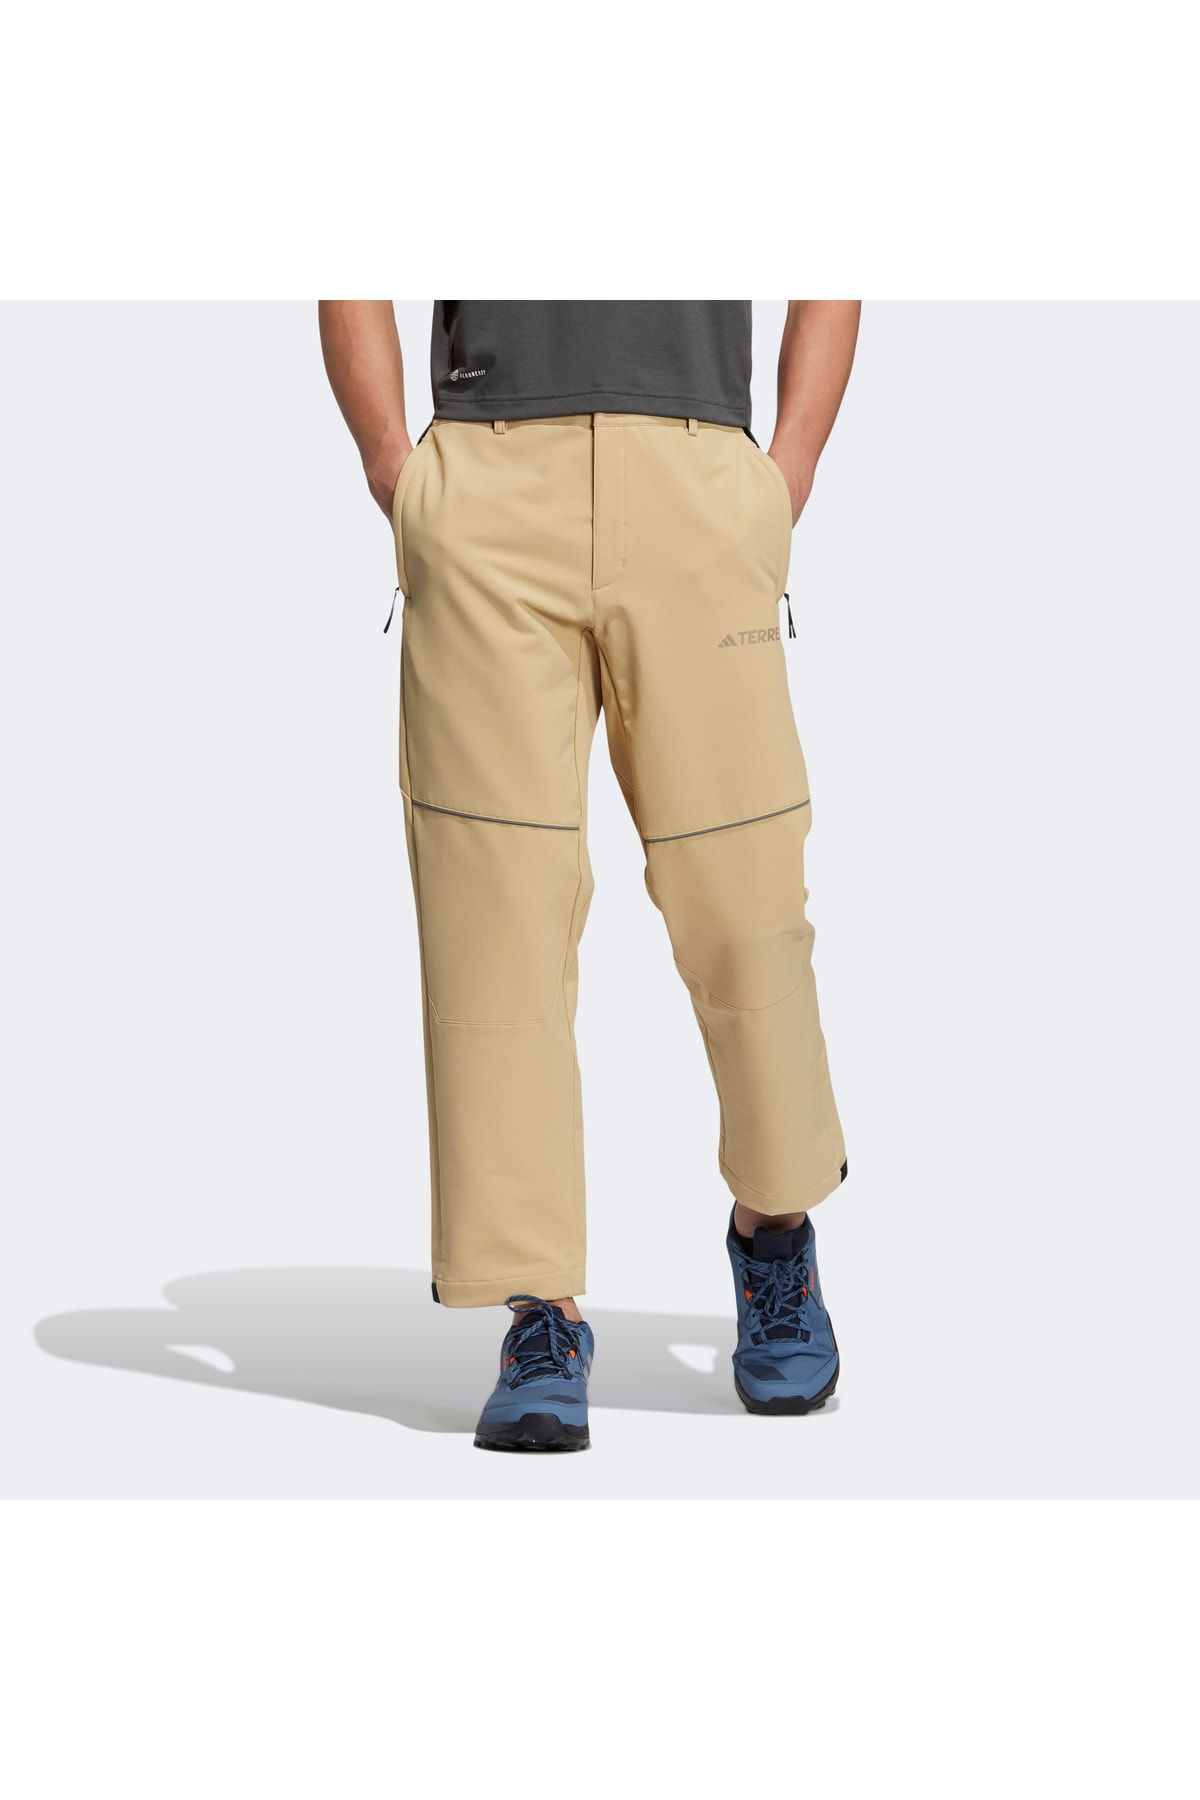 adidas Terrex Utilitas Soft Shell Erkek Bej Outdoor Pantolon (ıc7993)